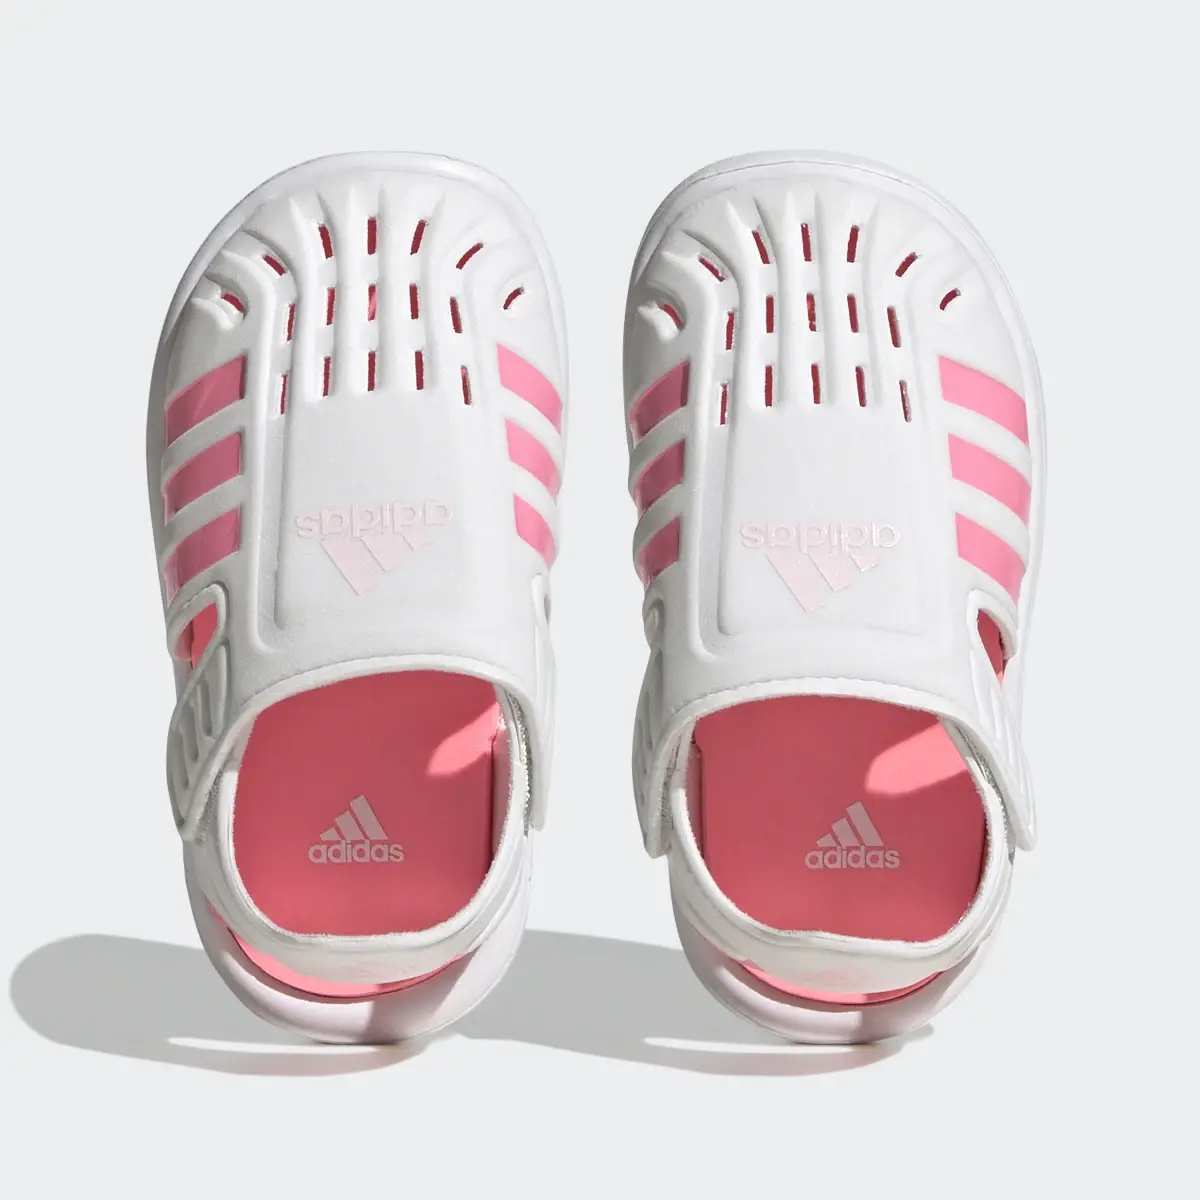 Adidas Closed-Toe Summer Water Sandals. 3